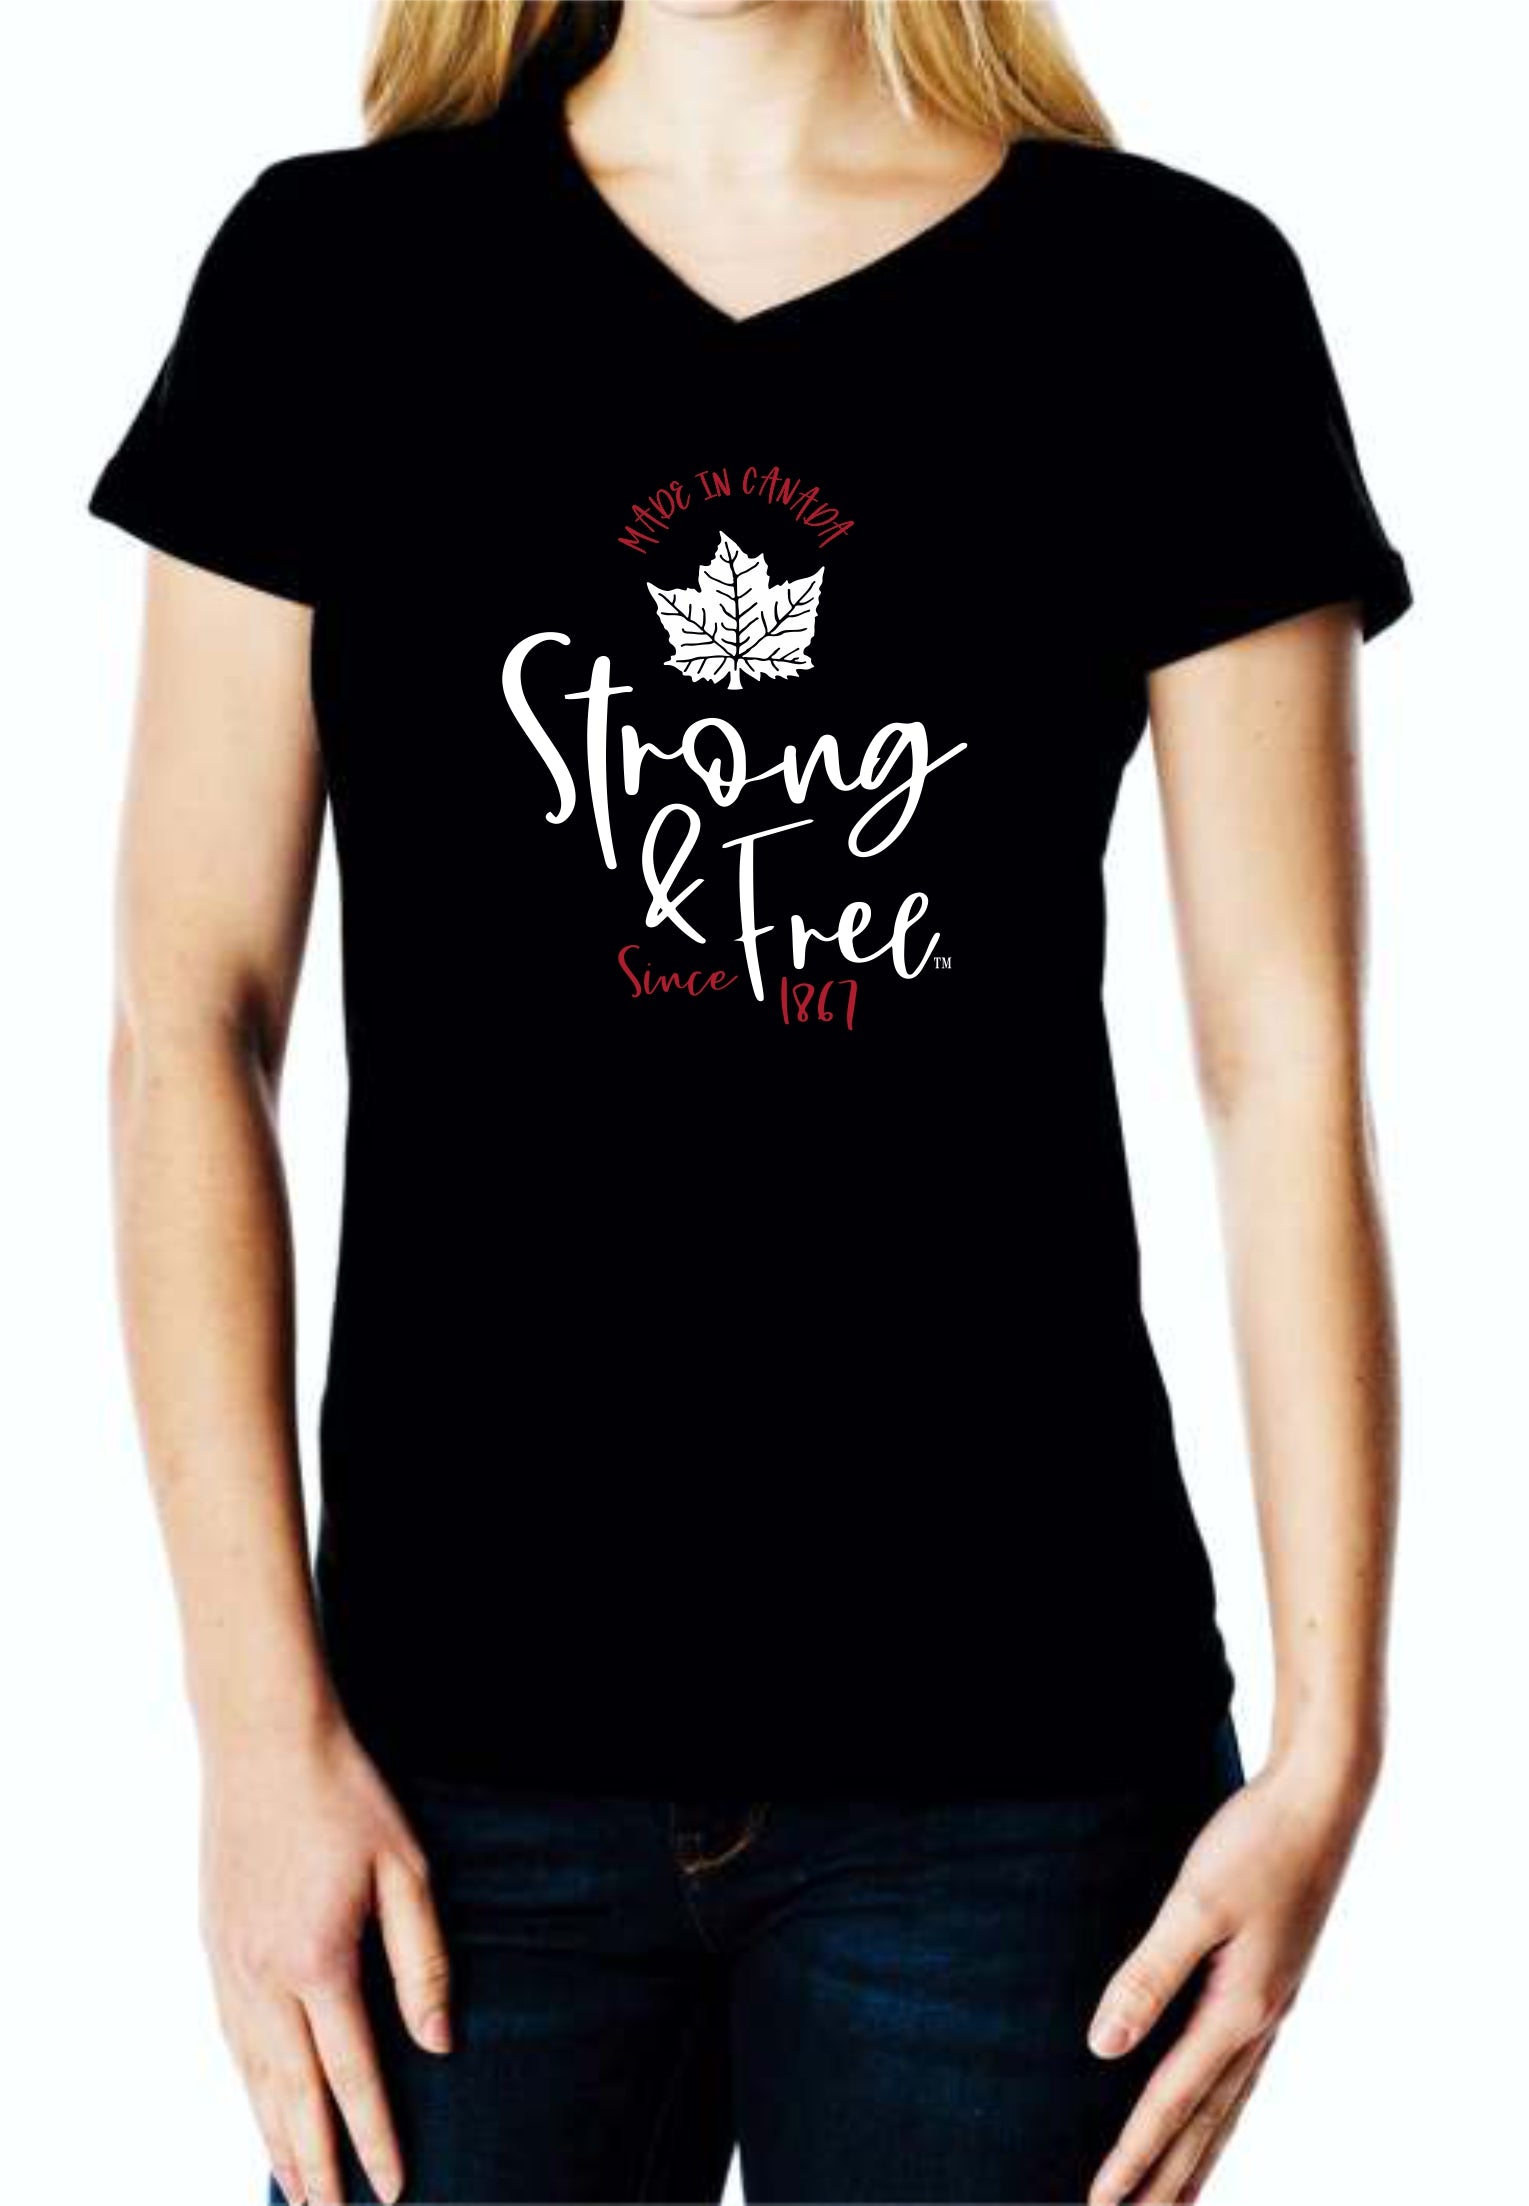 V shape T shirt Price - 3000ks - Thiri online shopping